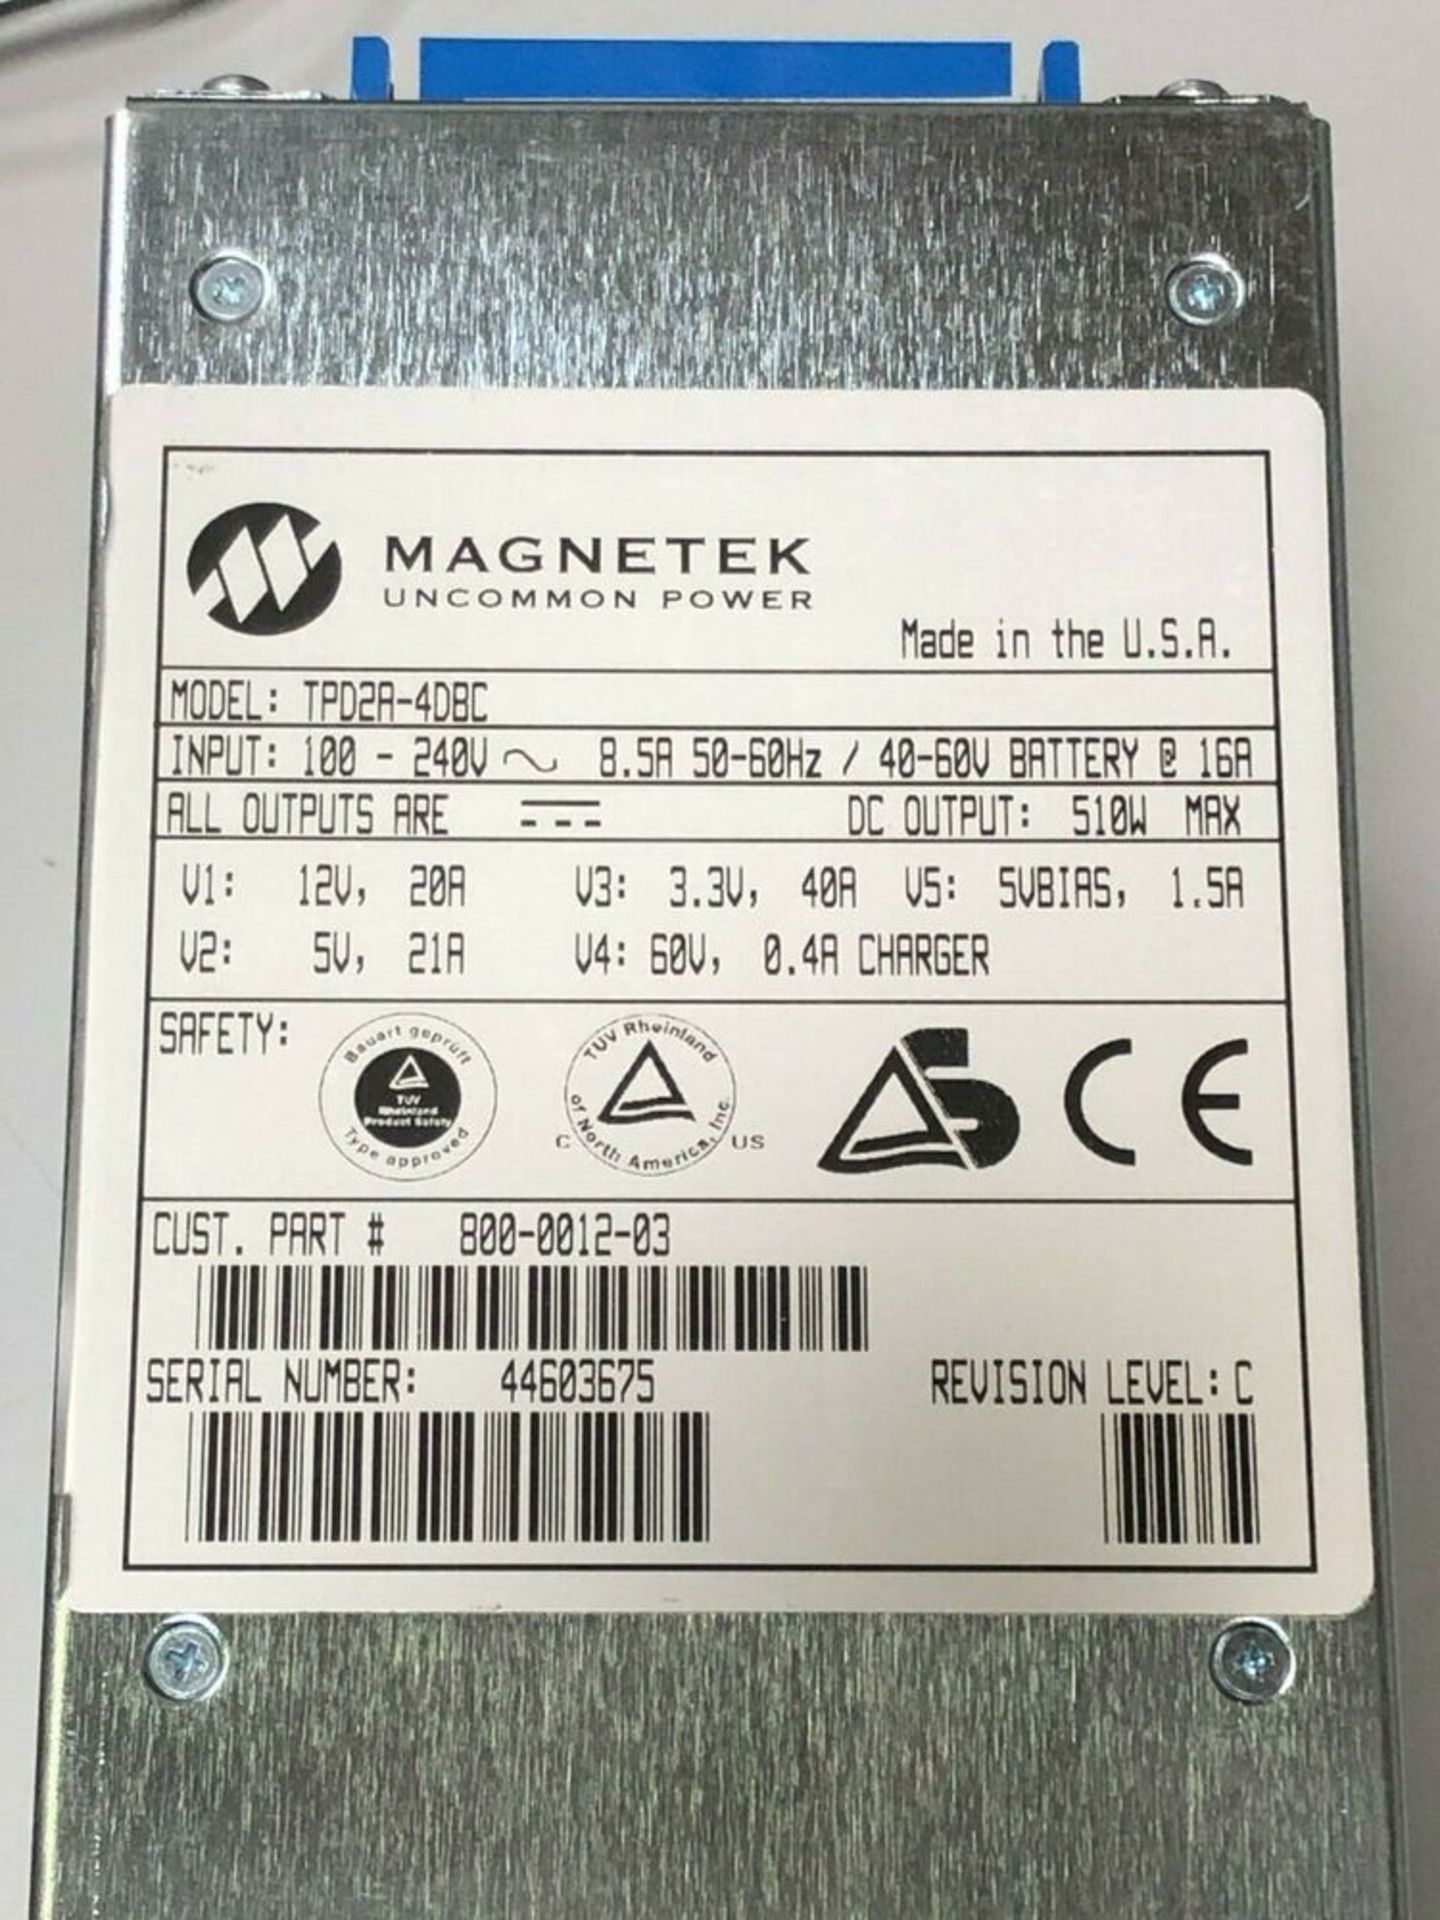 Magnetek TPD2A-4D8C Hot Swap Power Supply 510 Watt P/N 800-0012-03 - Image 2 of 4